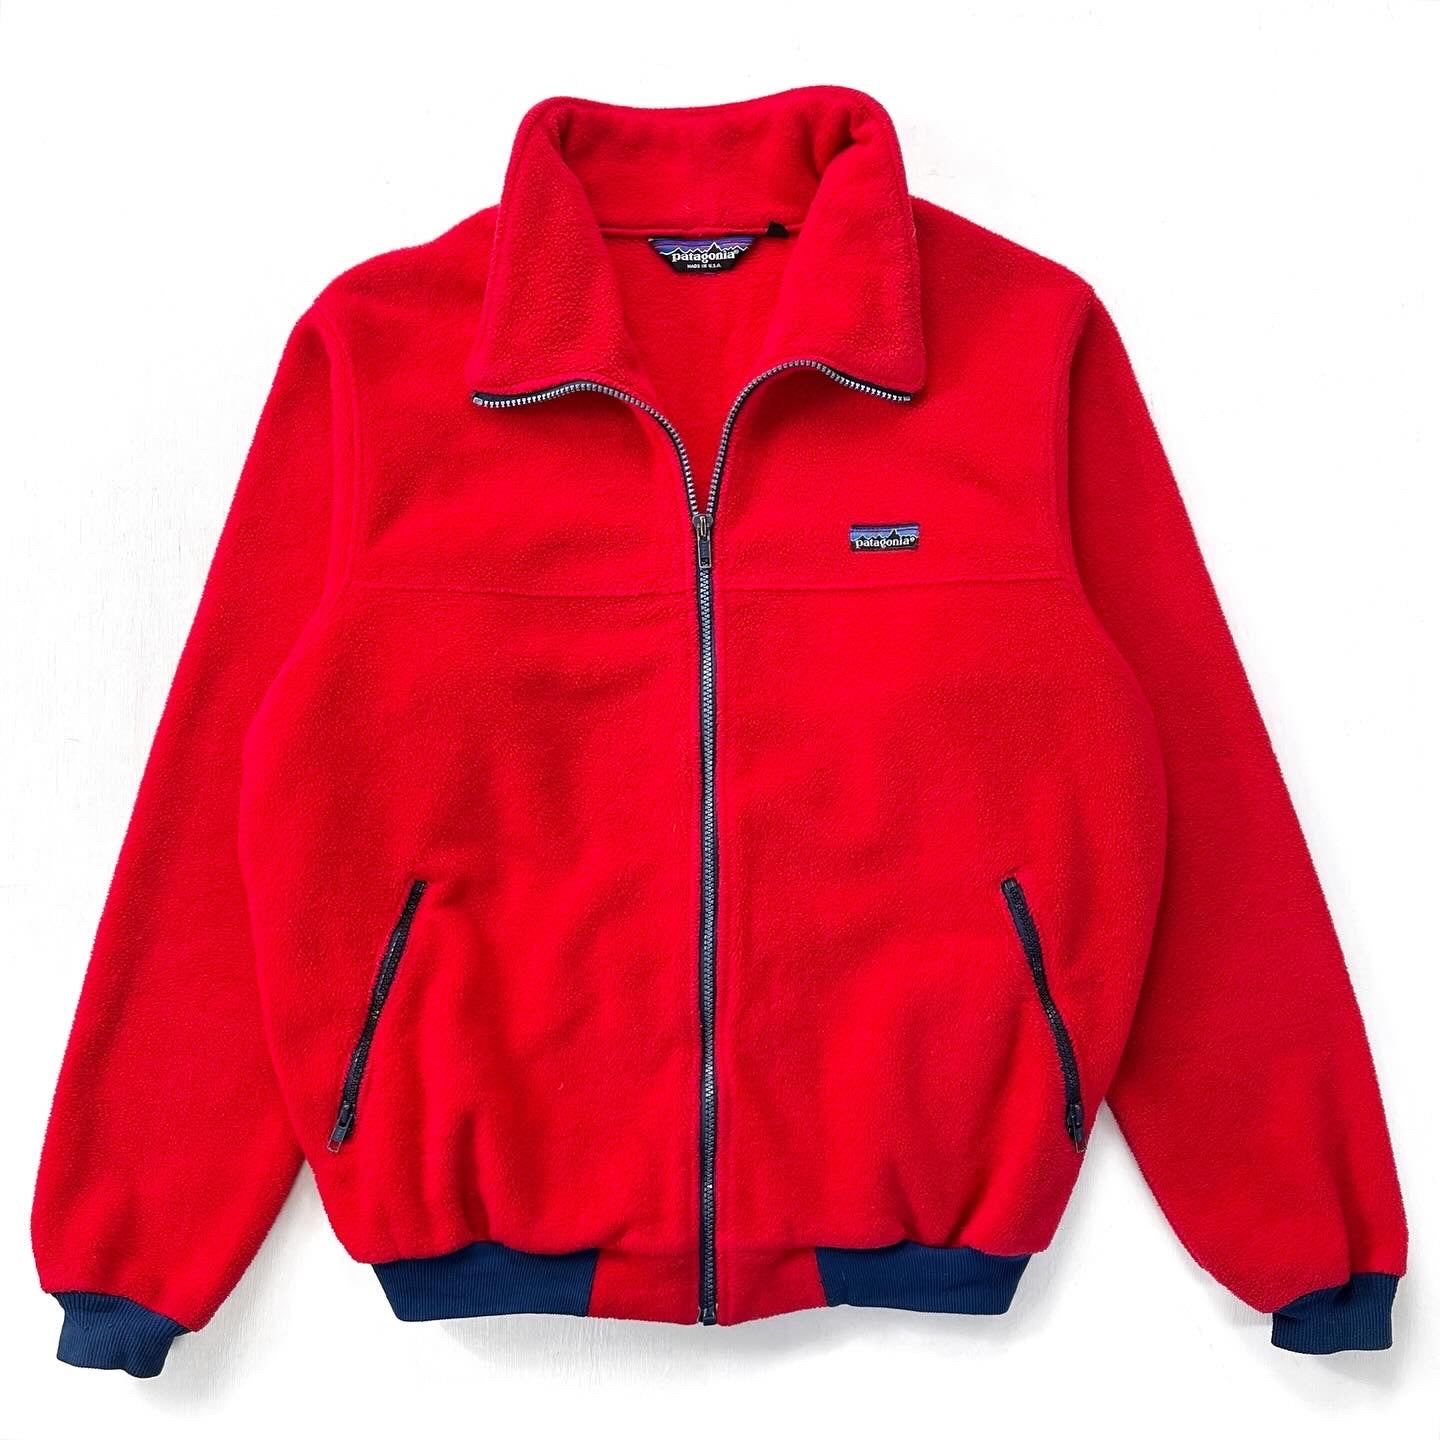 1985 Patagonia Bunting Full-Zip Fleece Jacket, Red & Navy (L)